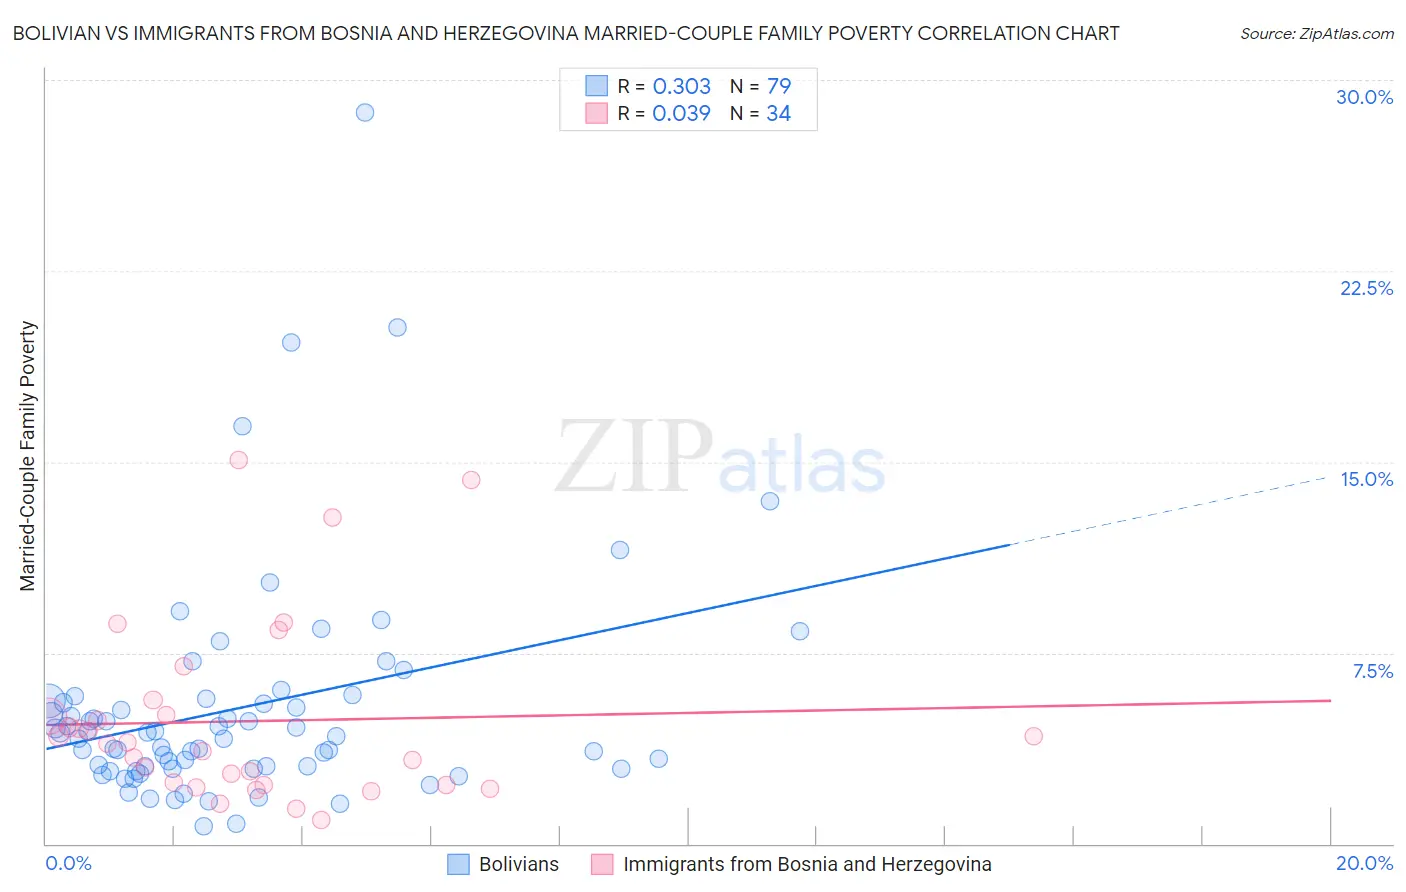 Bolivian vs Immigrants from Bosnia and Herzegovina Married-Couple Family Poverty